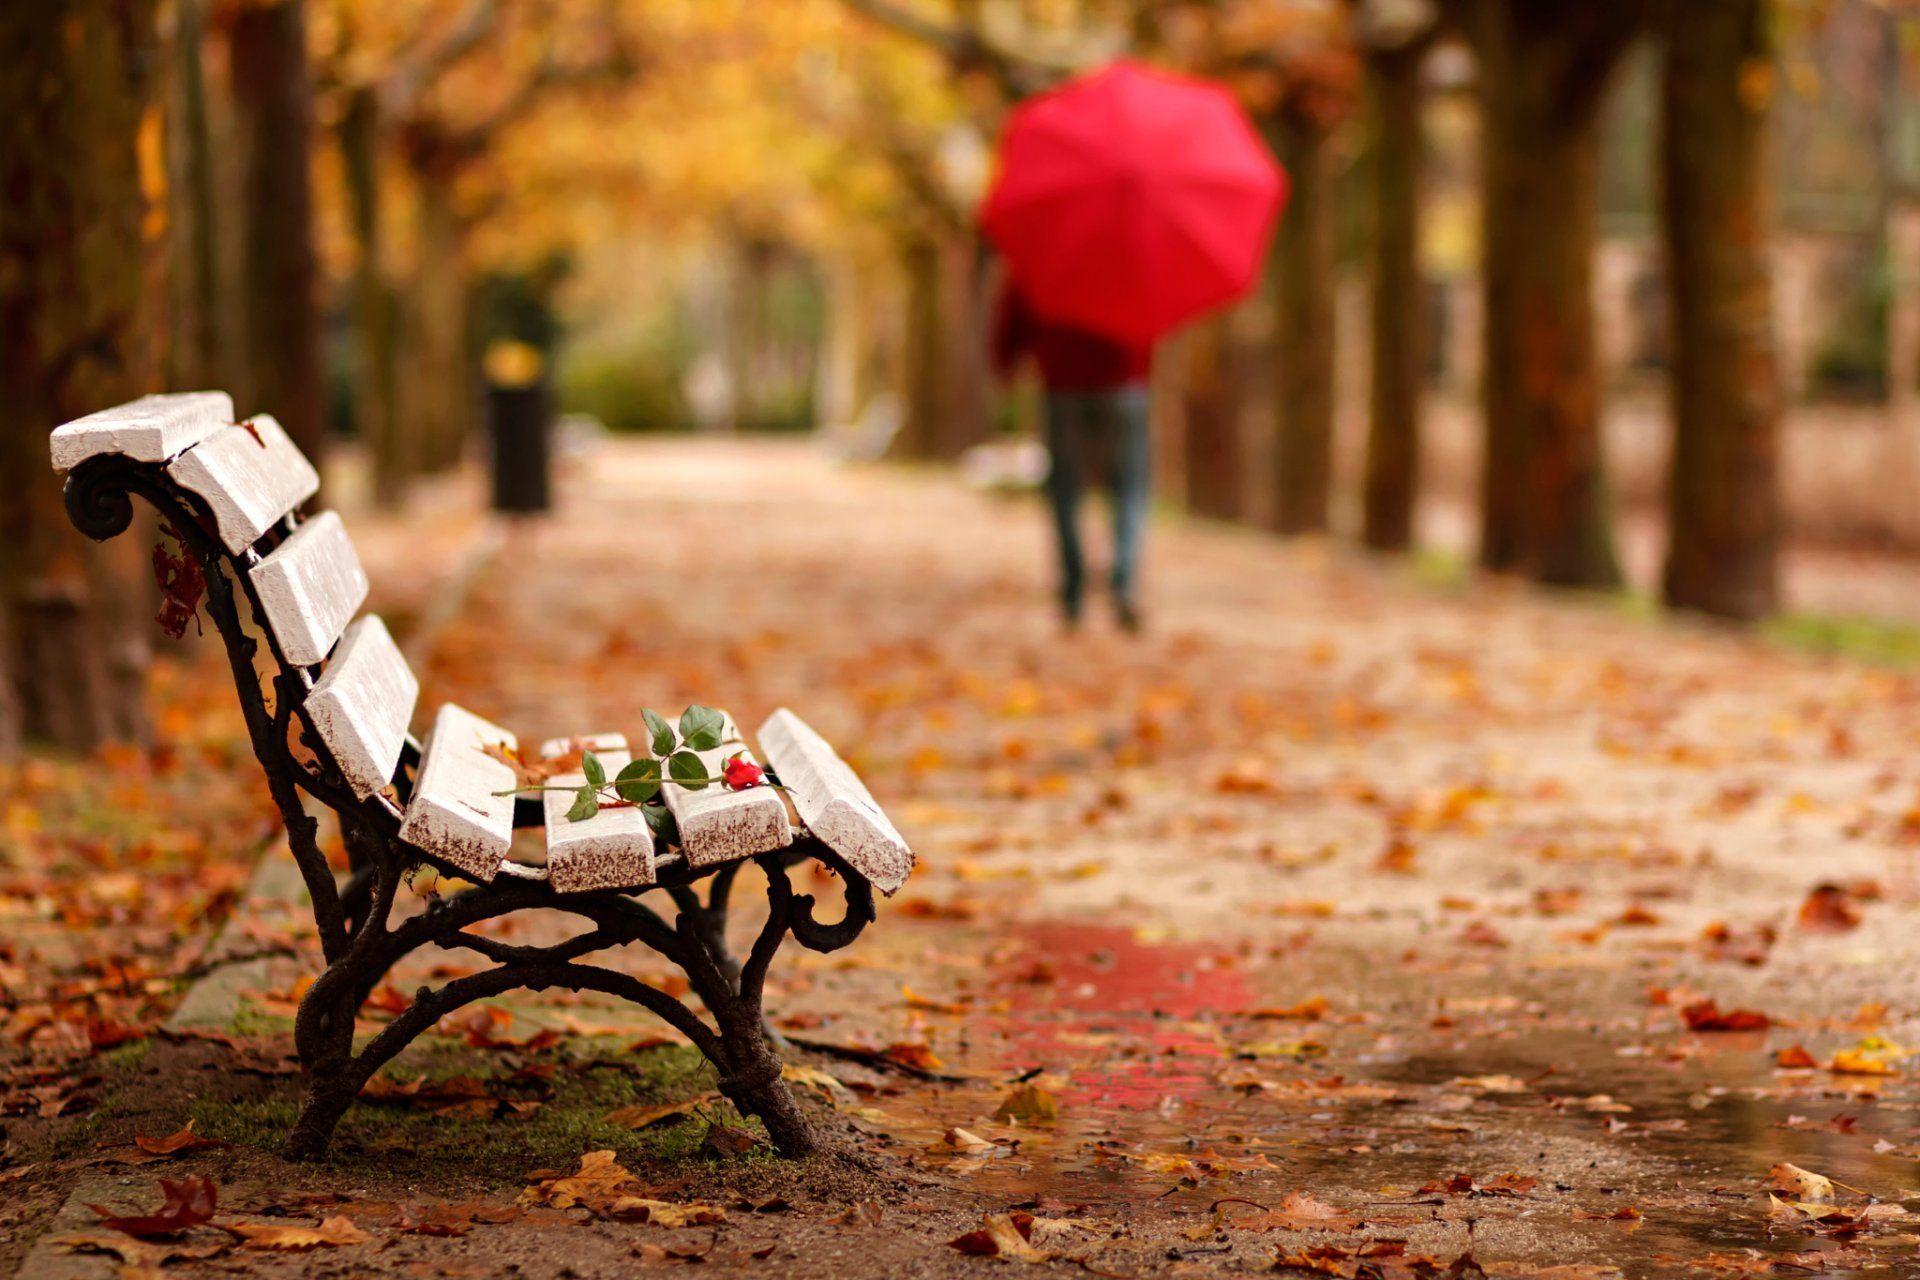 adios goodbye park bench flower rose man maintenance umbrella